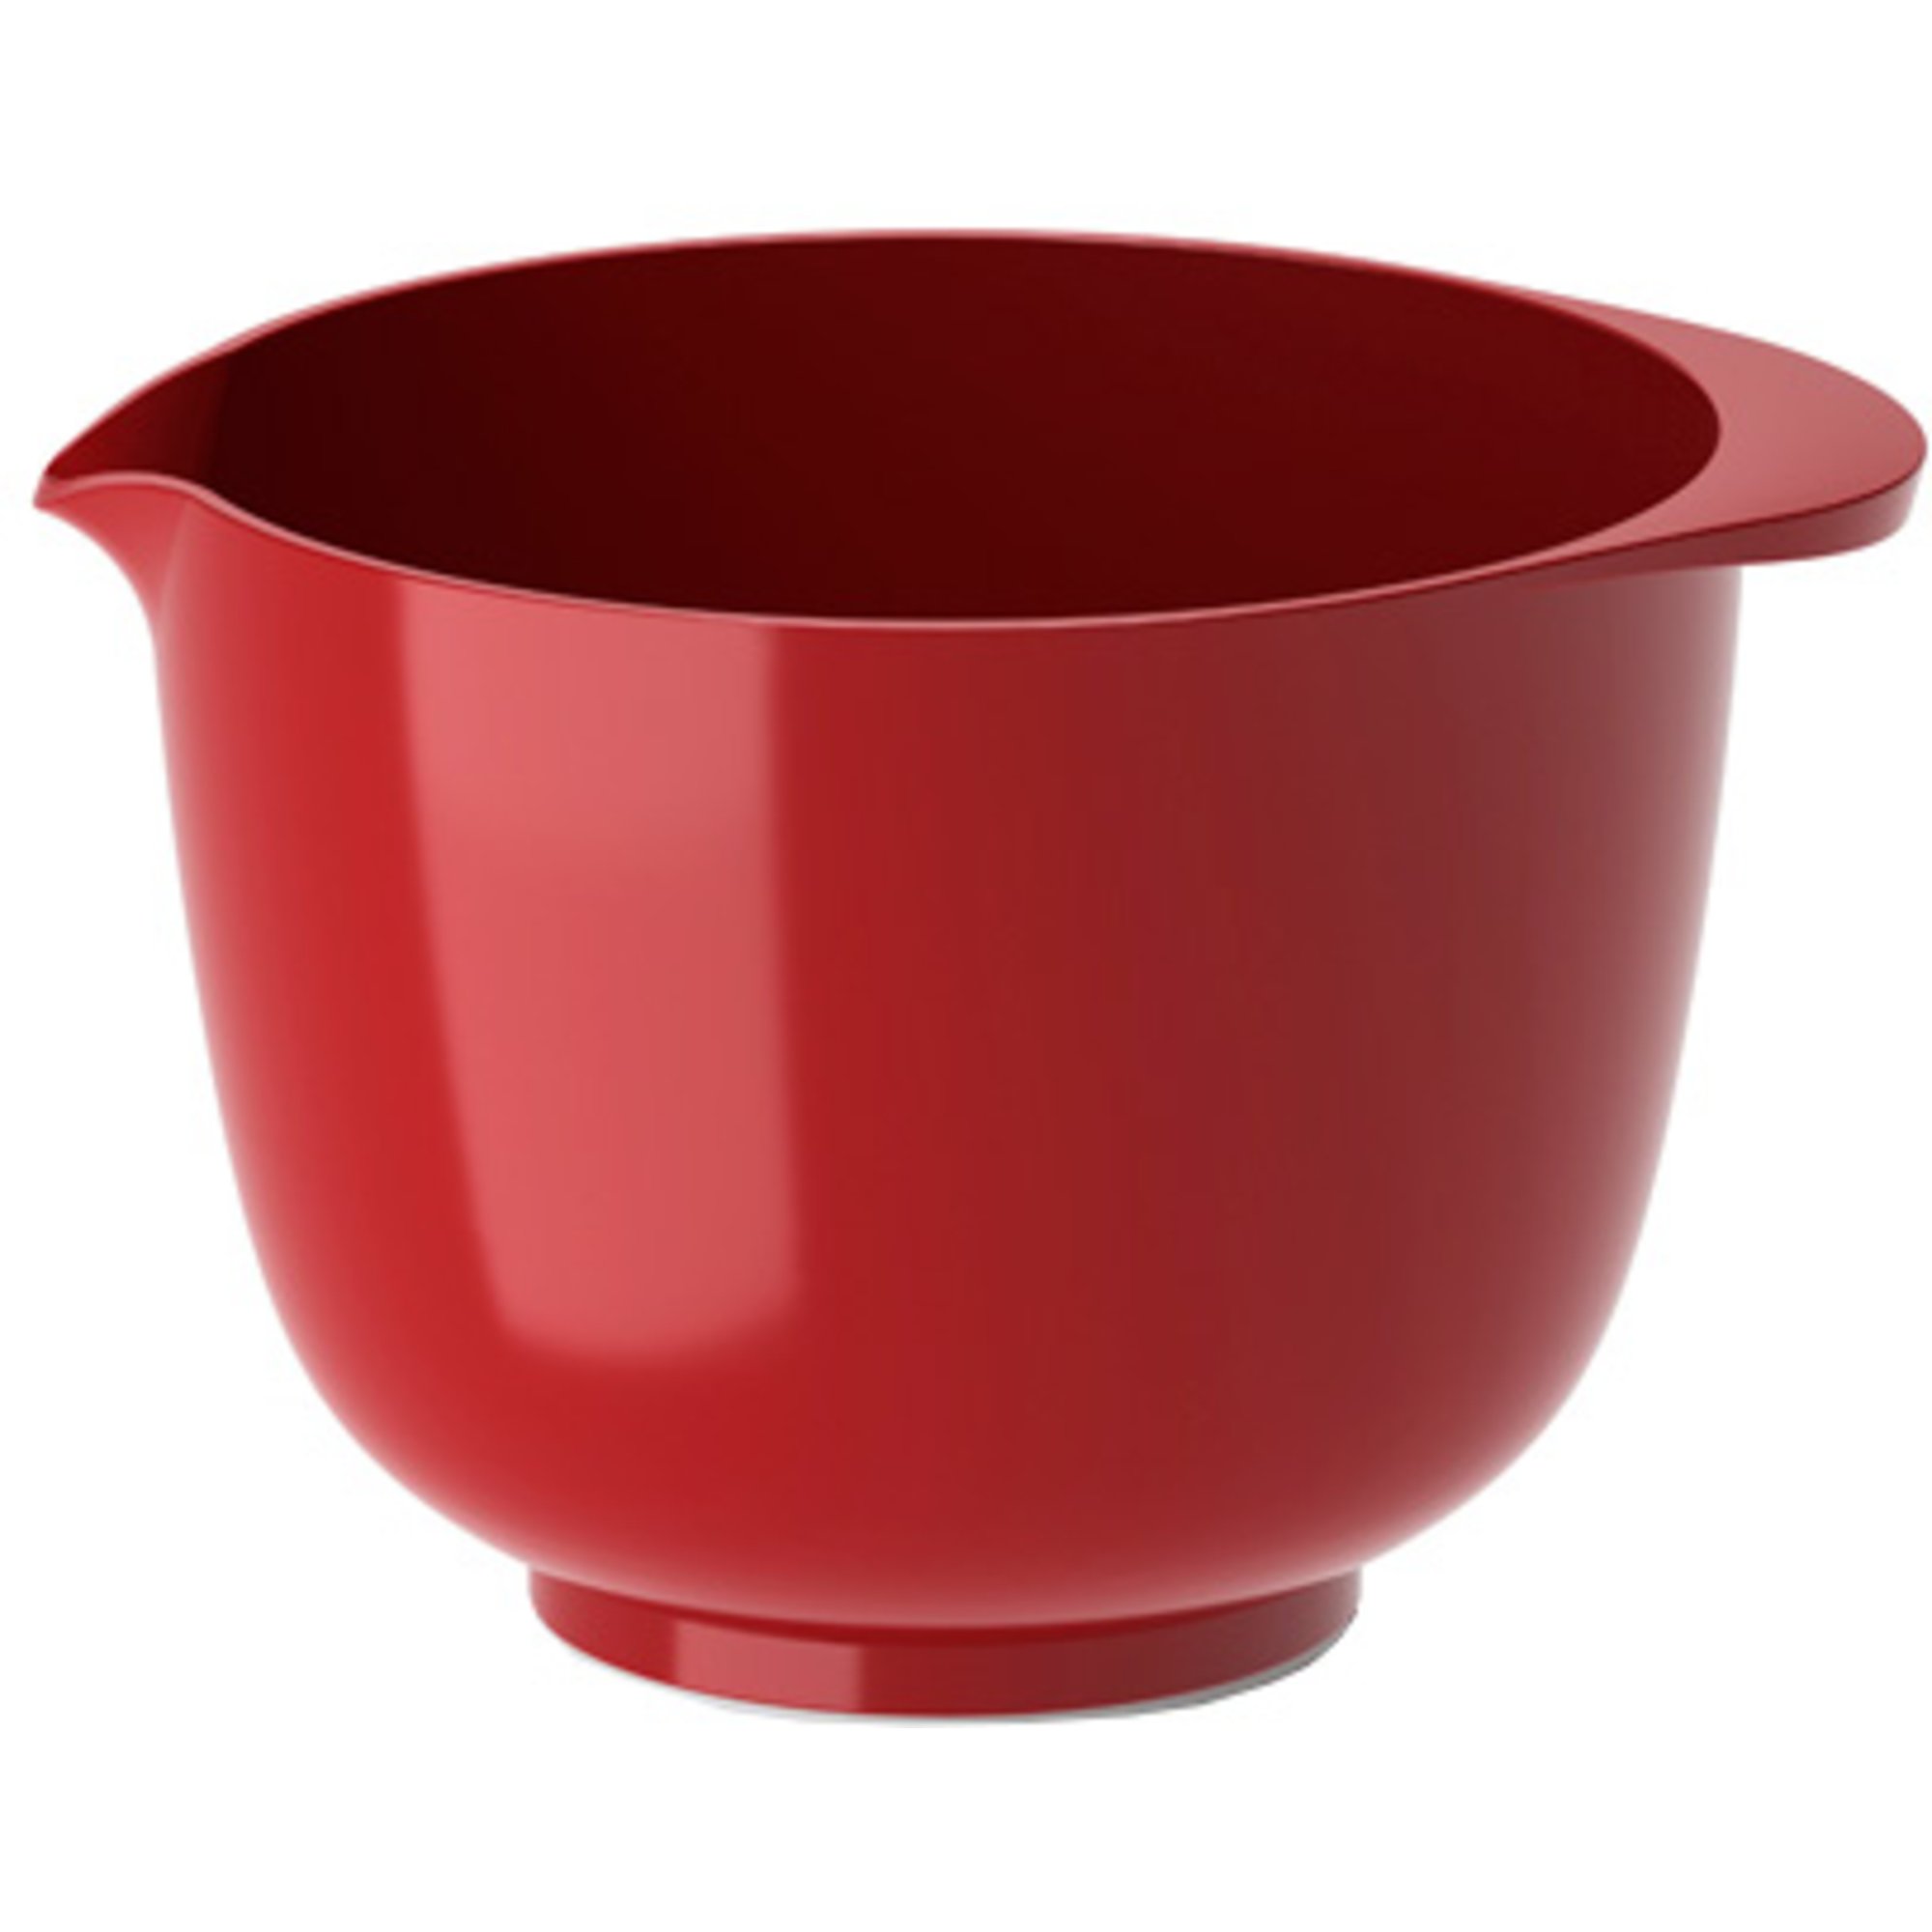 Rosti Margrethe skål 1,5 liter, rød